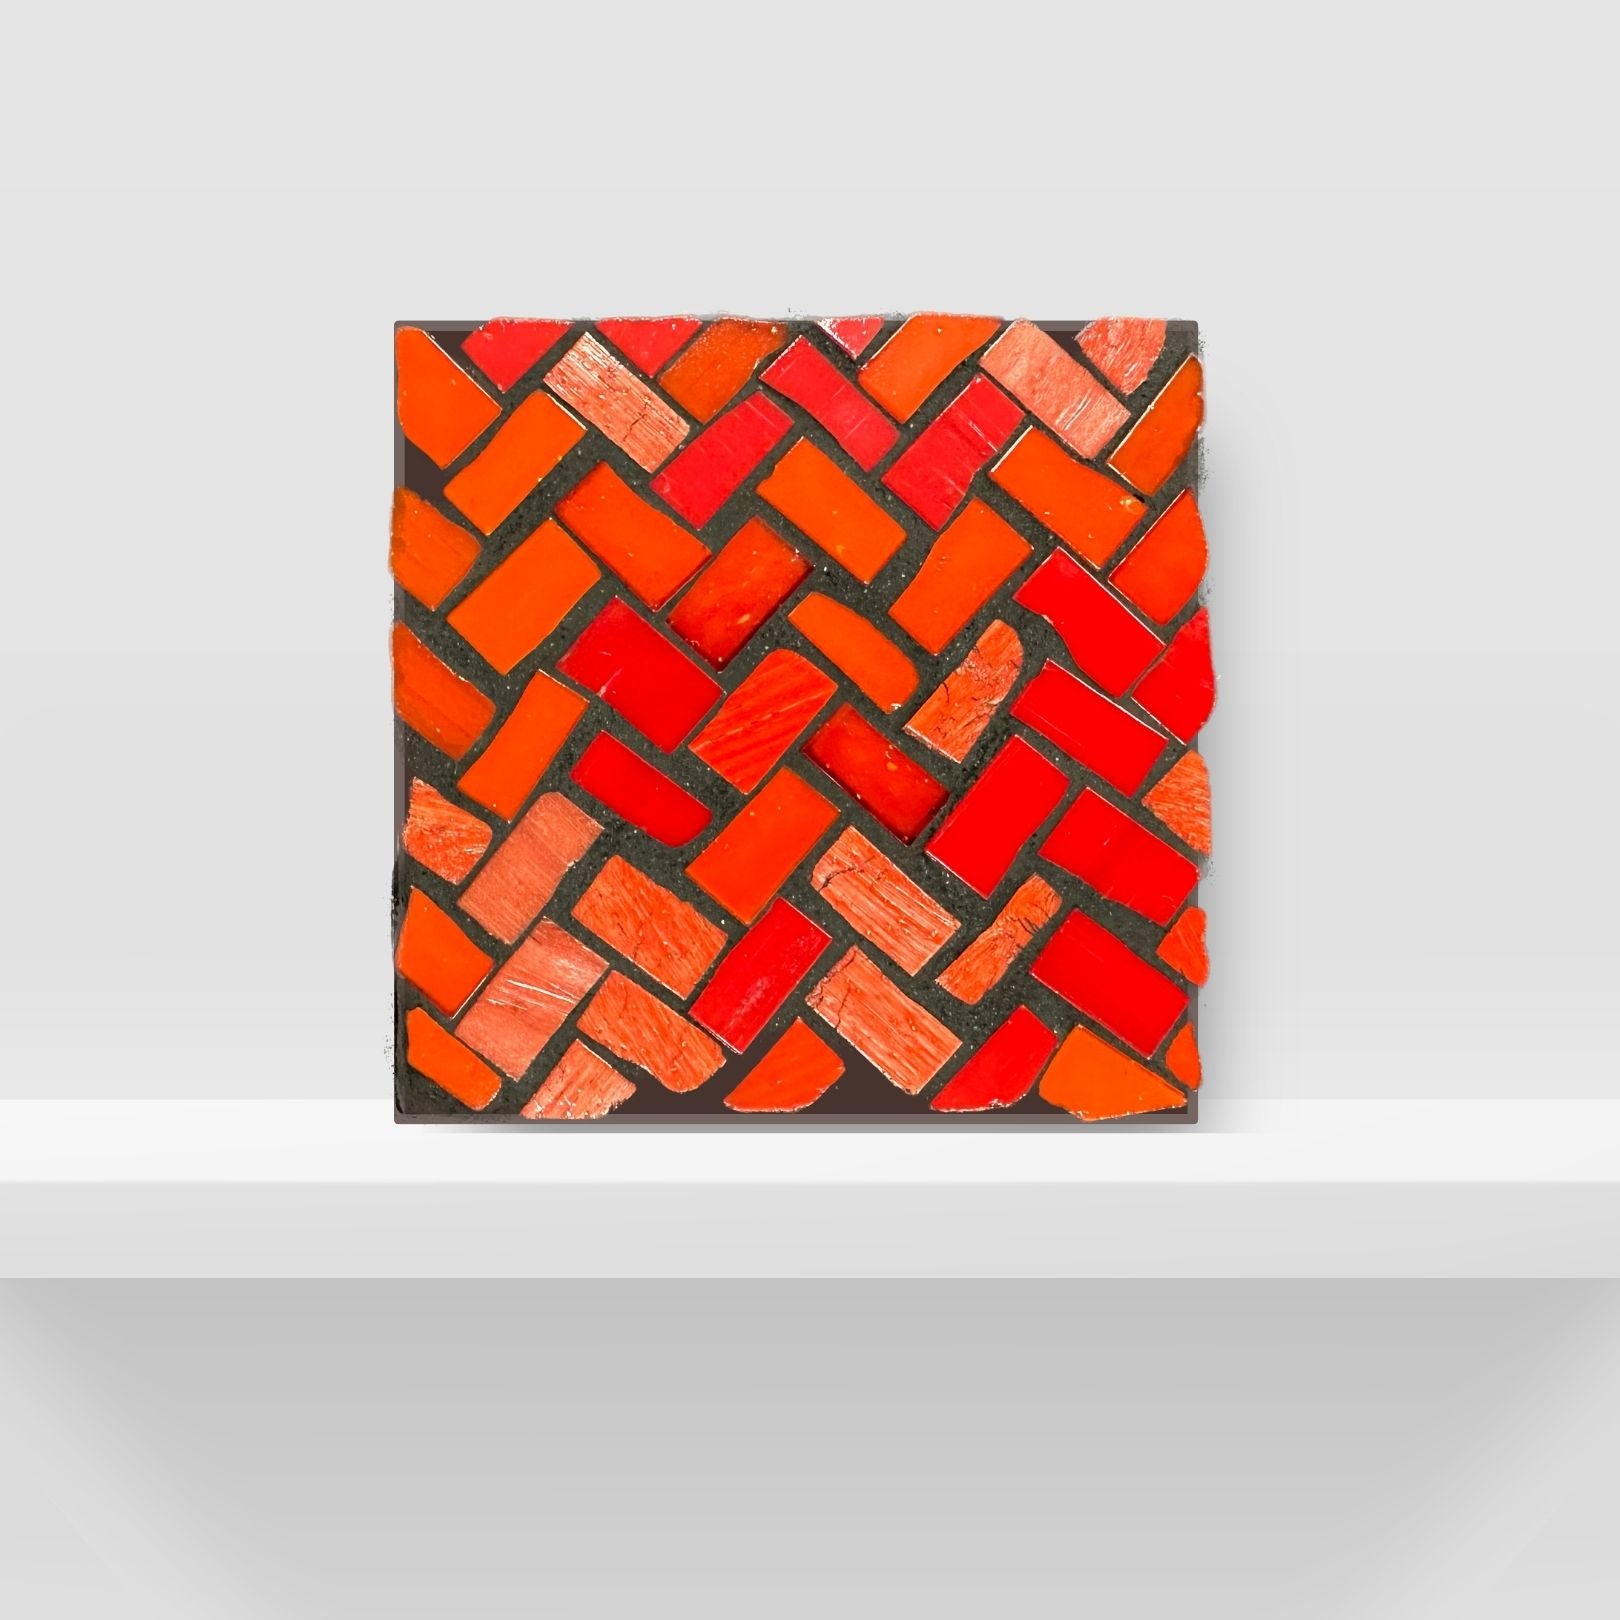 Red Brick Tile